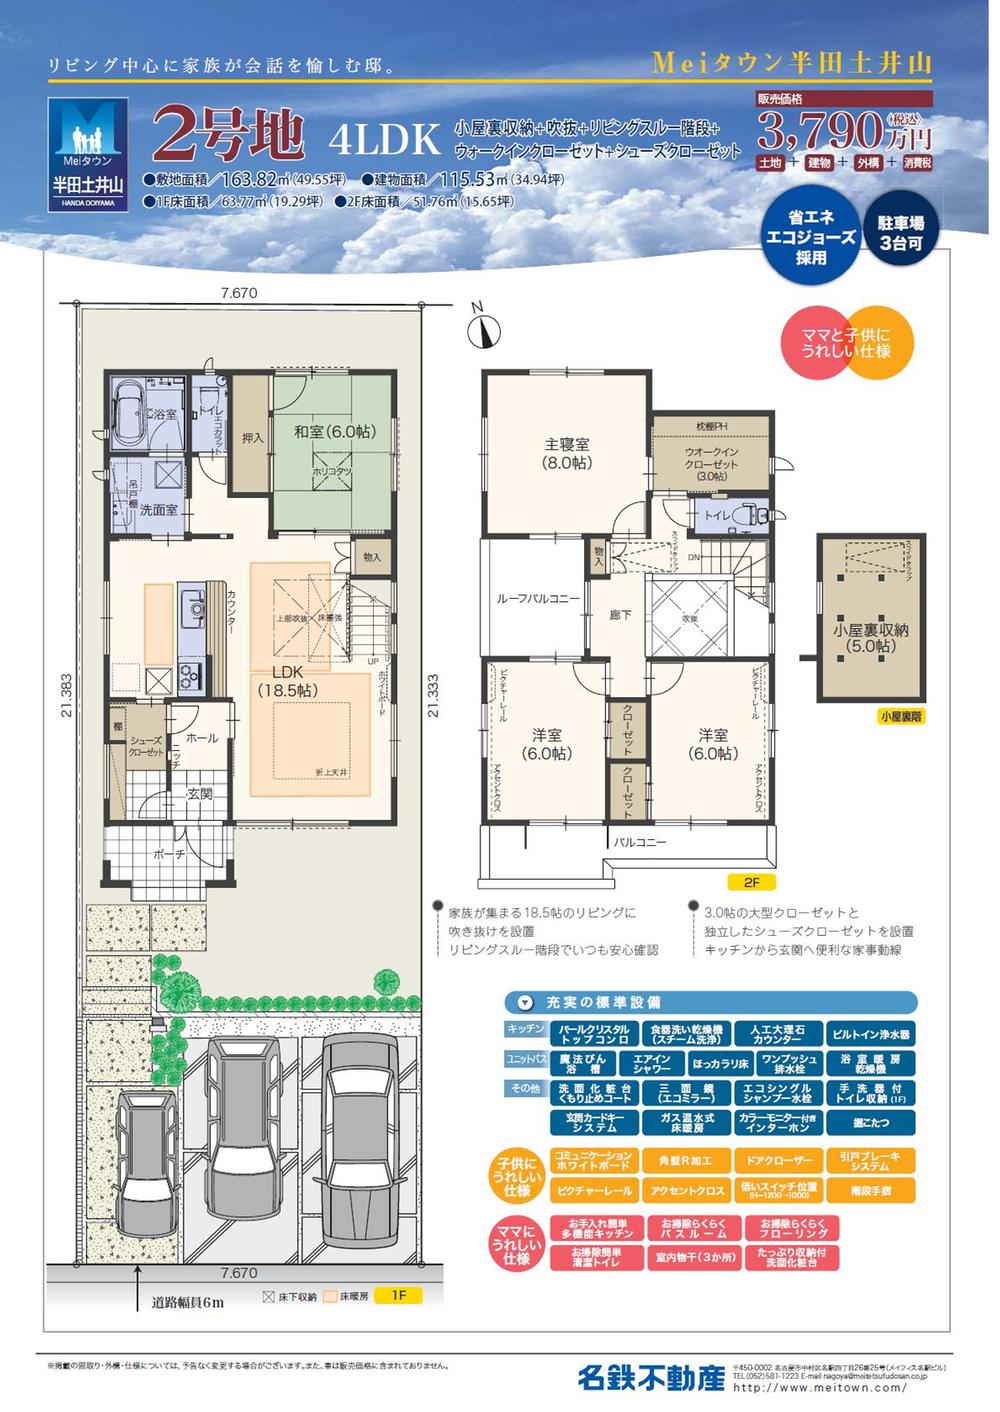 Floor plan. (No. 2 locations), Price 37,900,000 yen, 4LDK, Land area 163.82 sq m , Building area 115.53 sq m